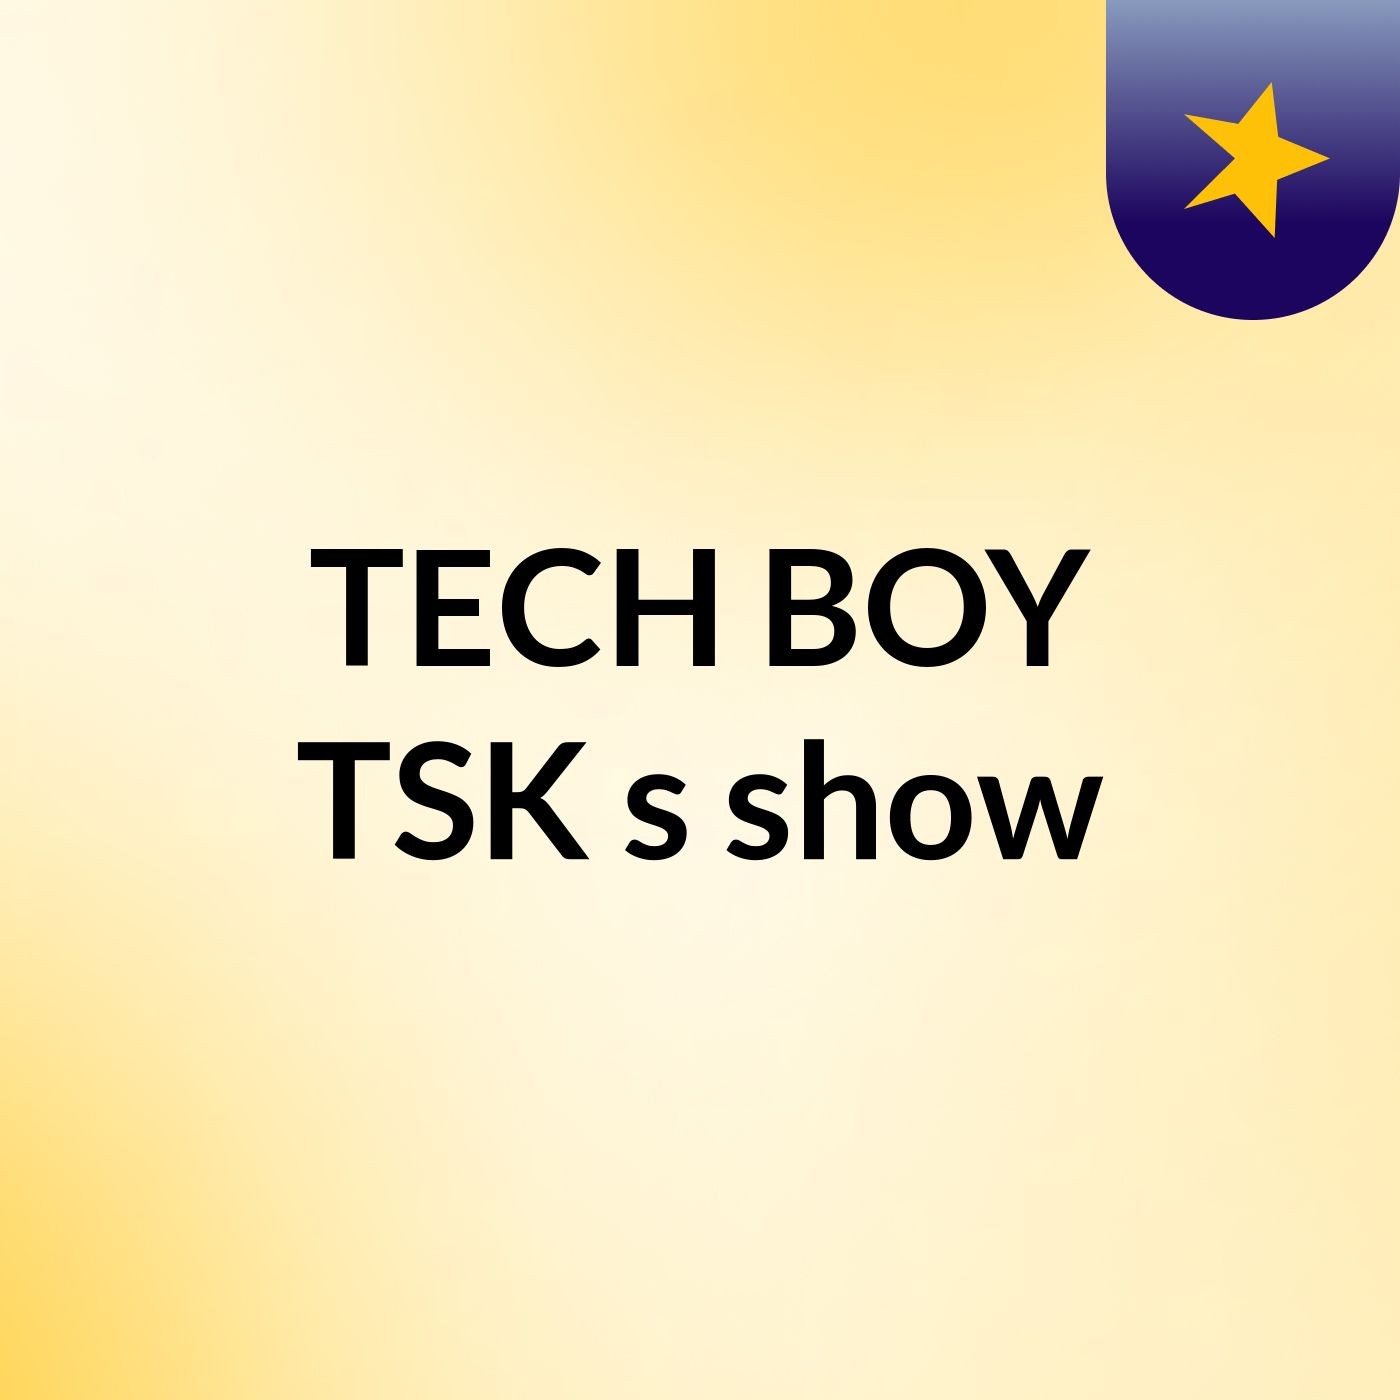 TECH BOY TSK's show